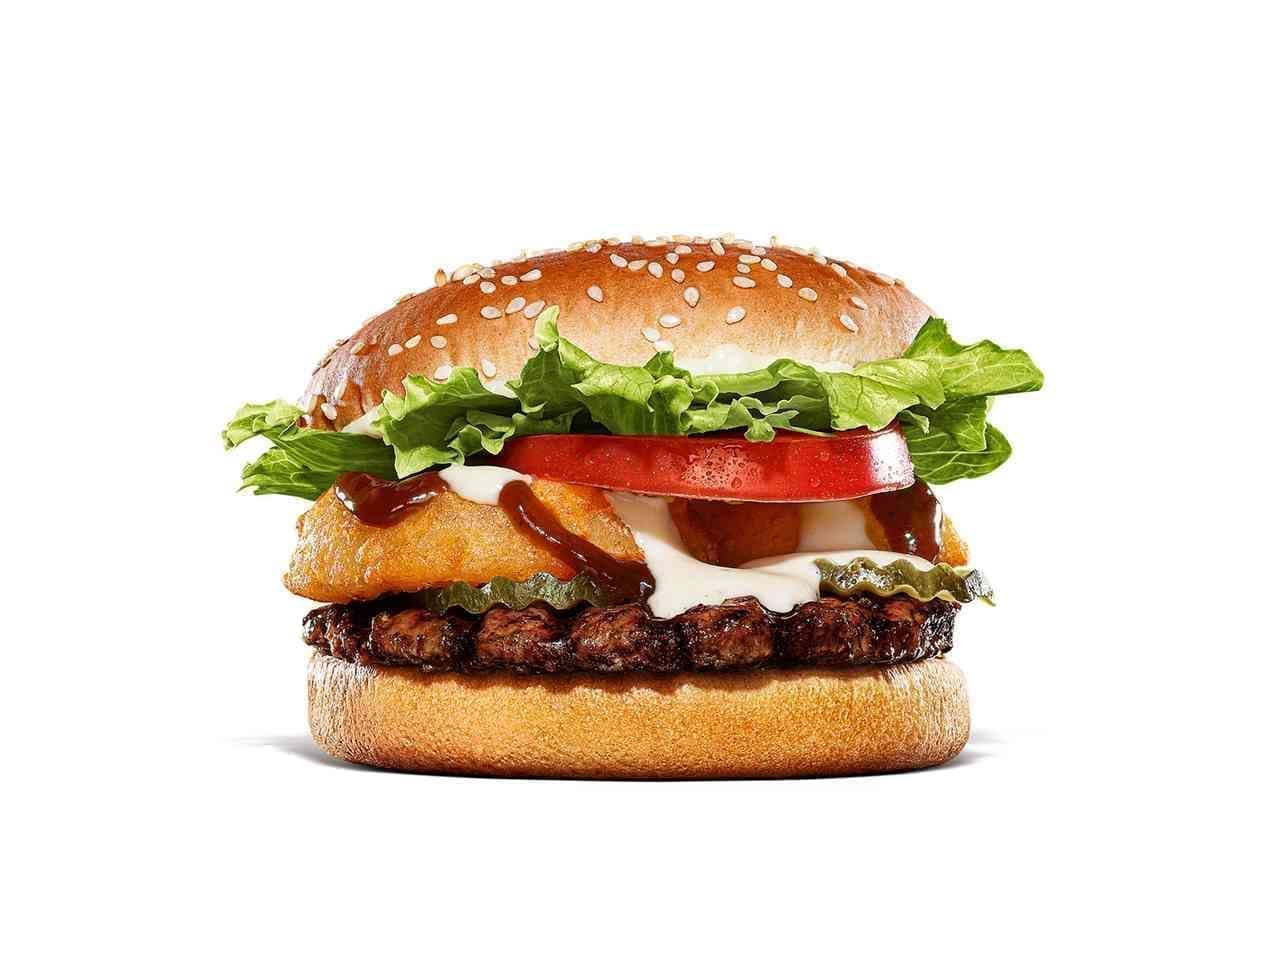 Burger King "Western Smoky Whopper"